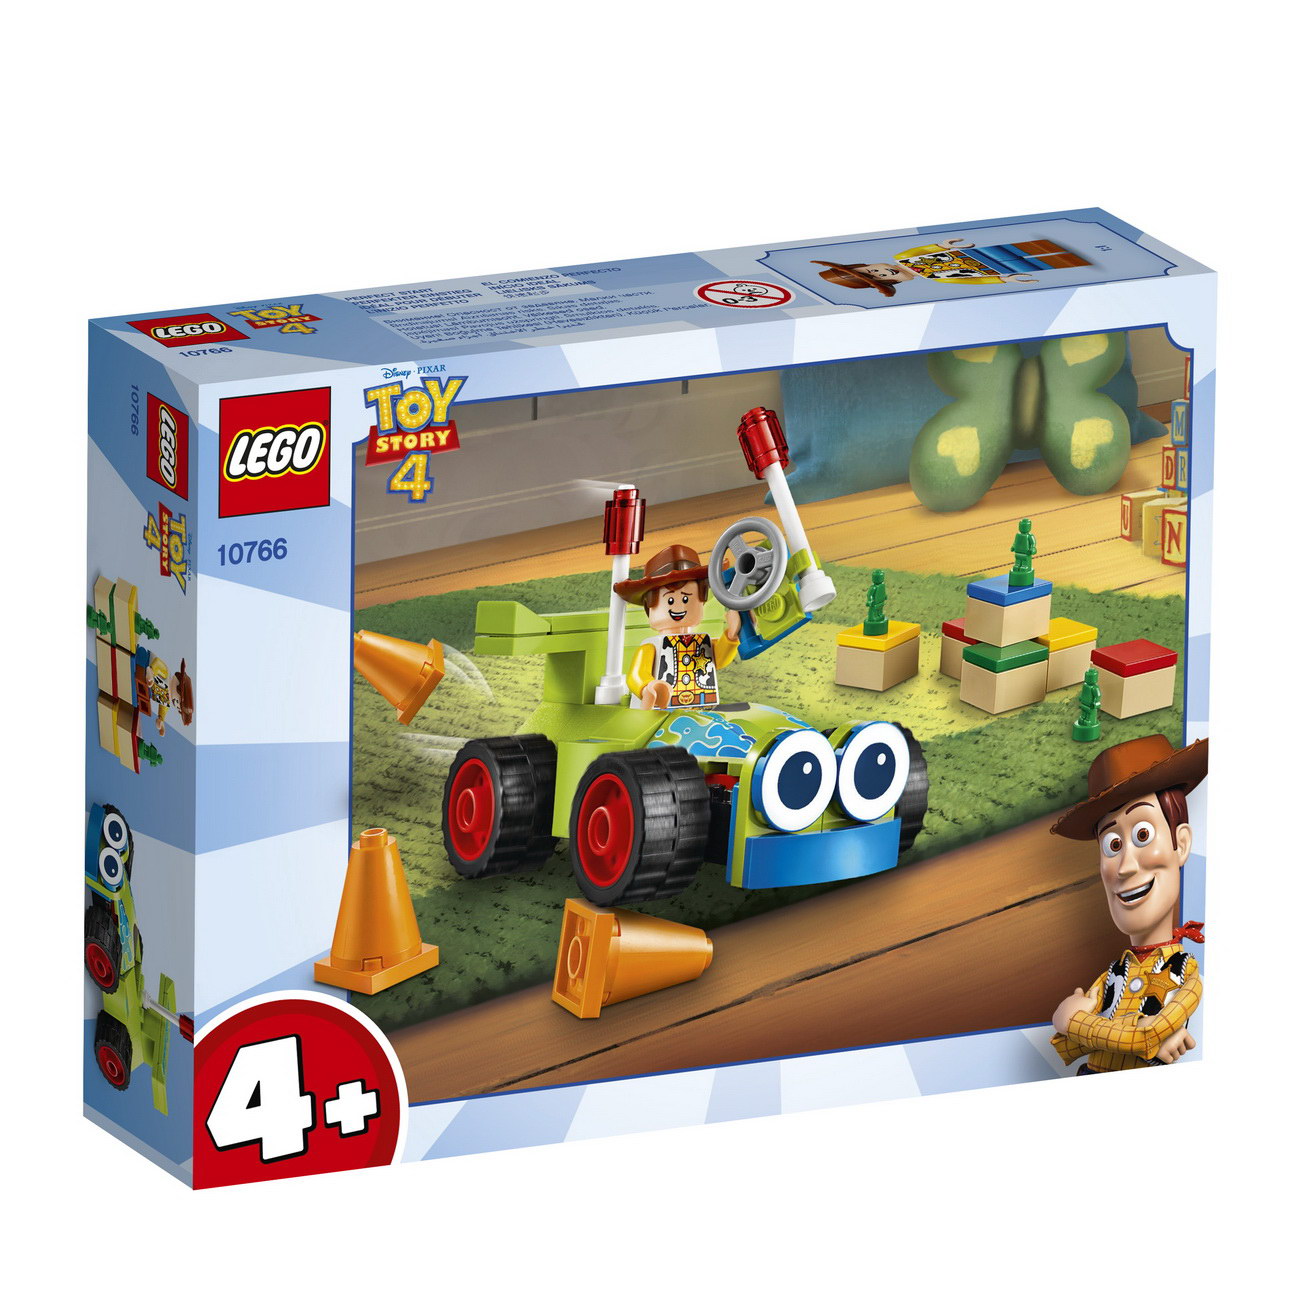 x-2019-08-LEGO 4+ (10766) Woody & Turbo